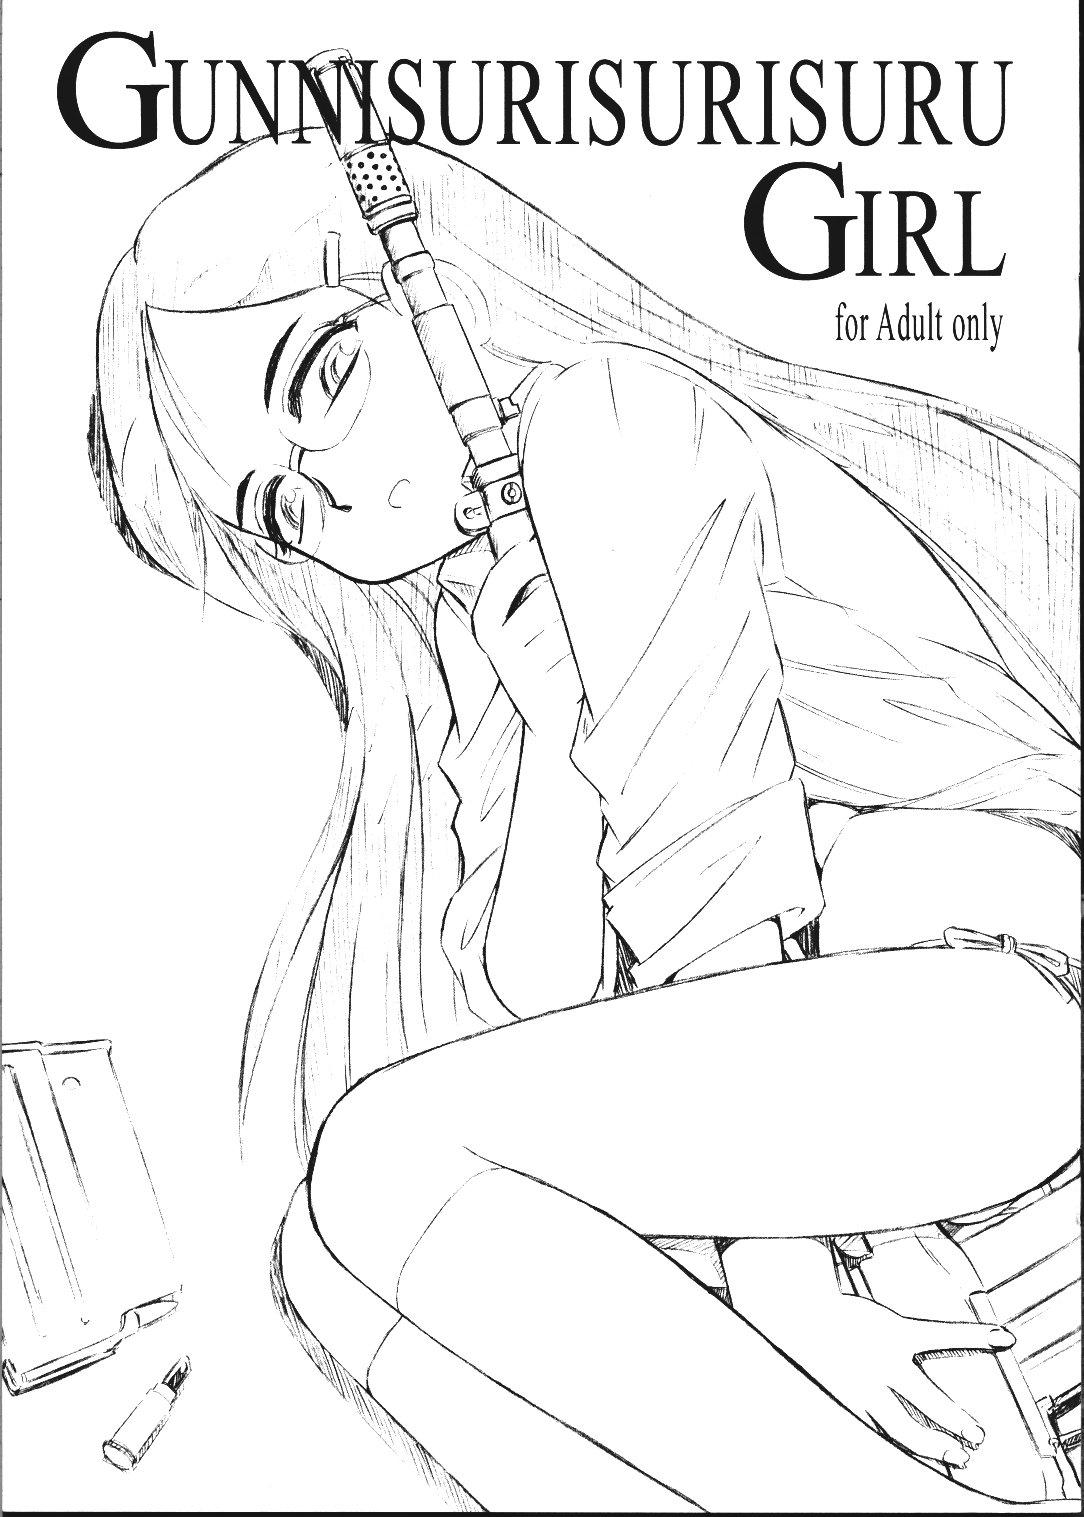 Hottie Gunnisurisurisuru Girl - Gunslinger girl Swingers - Picture 1